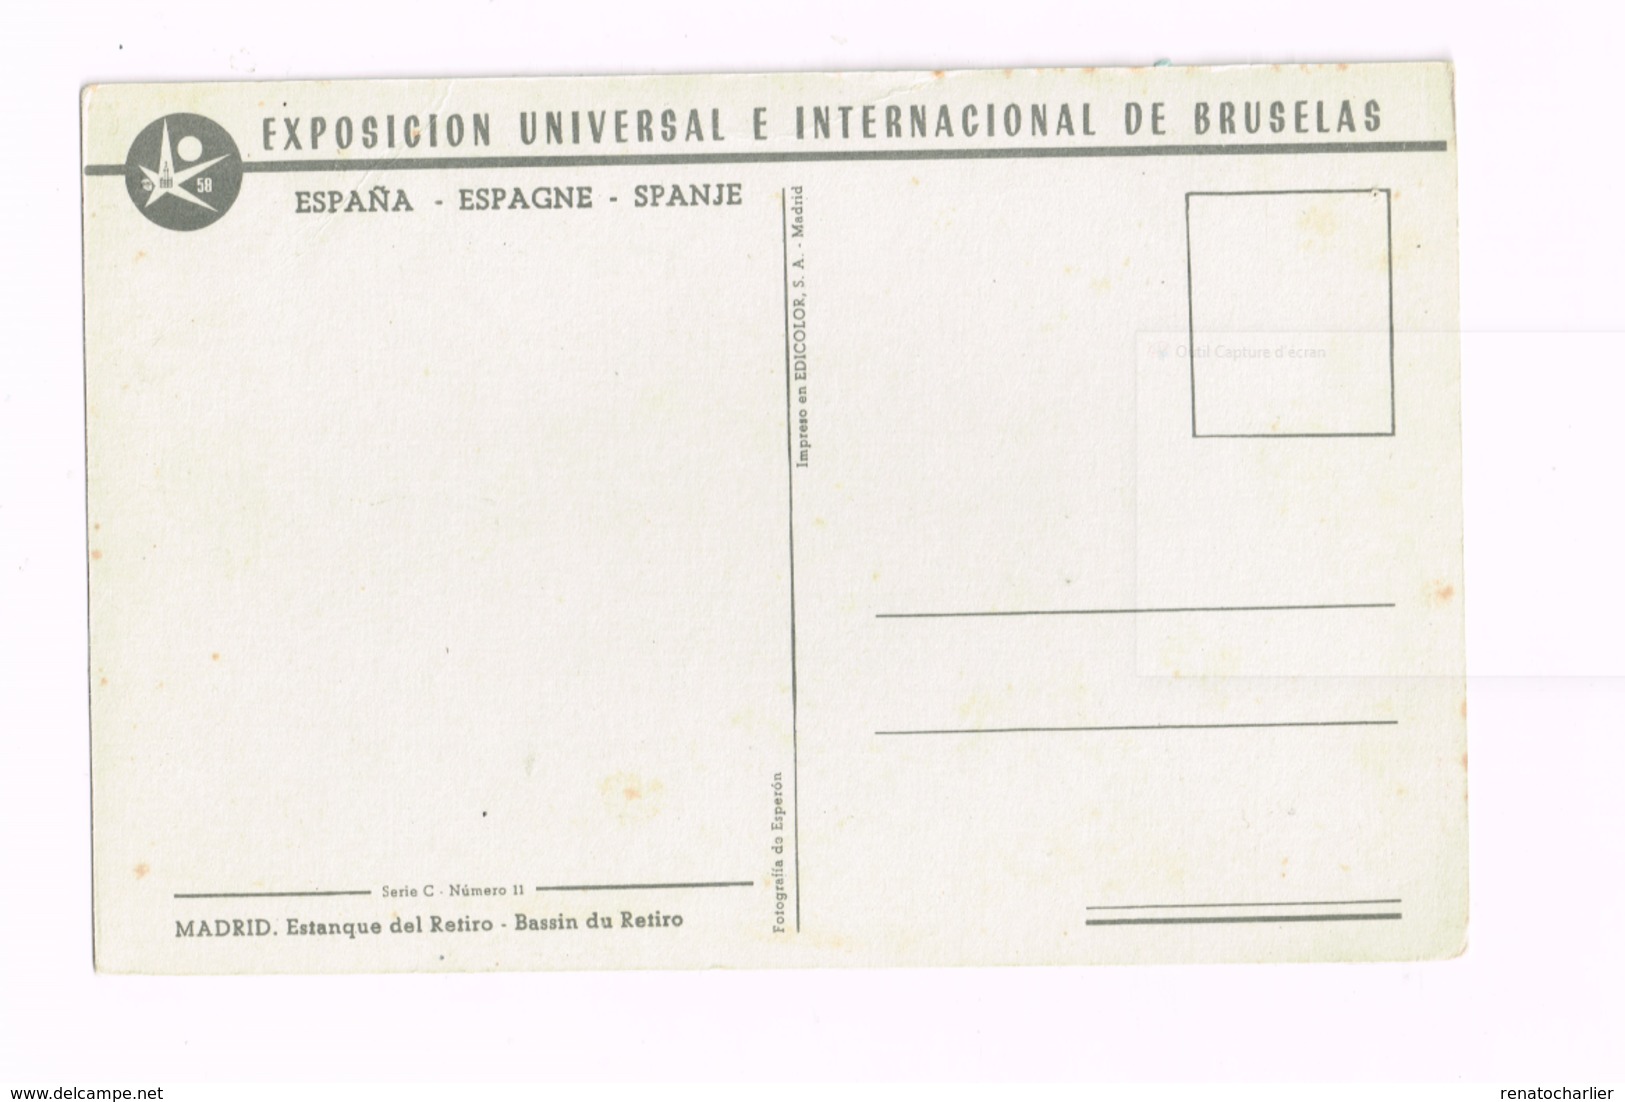 Exposition Universelle De Bruxelles.1958.Madrid.Bassin Du REtiro. - Exposiciones Universales